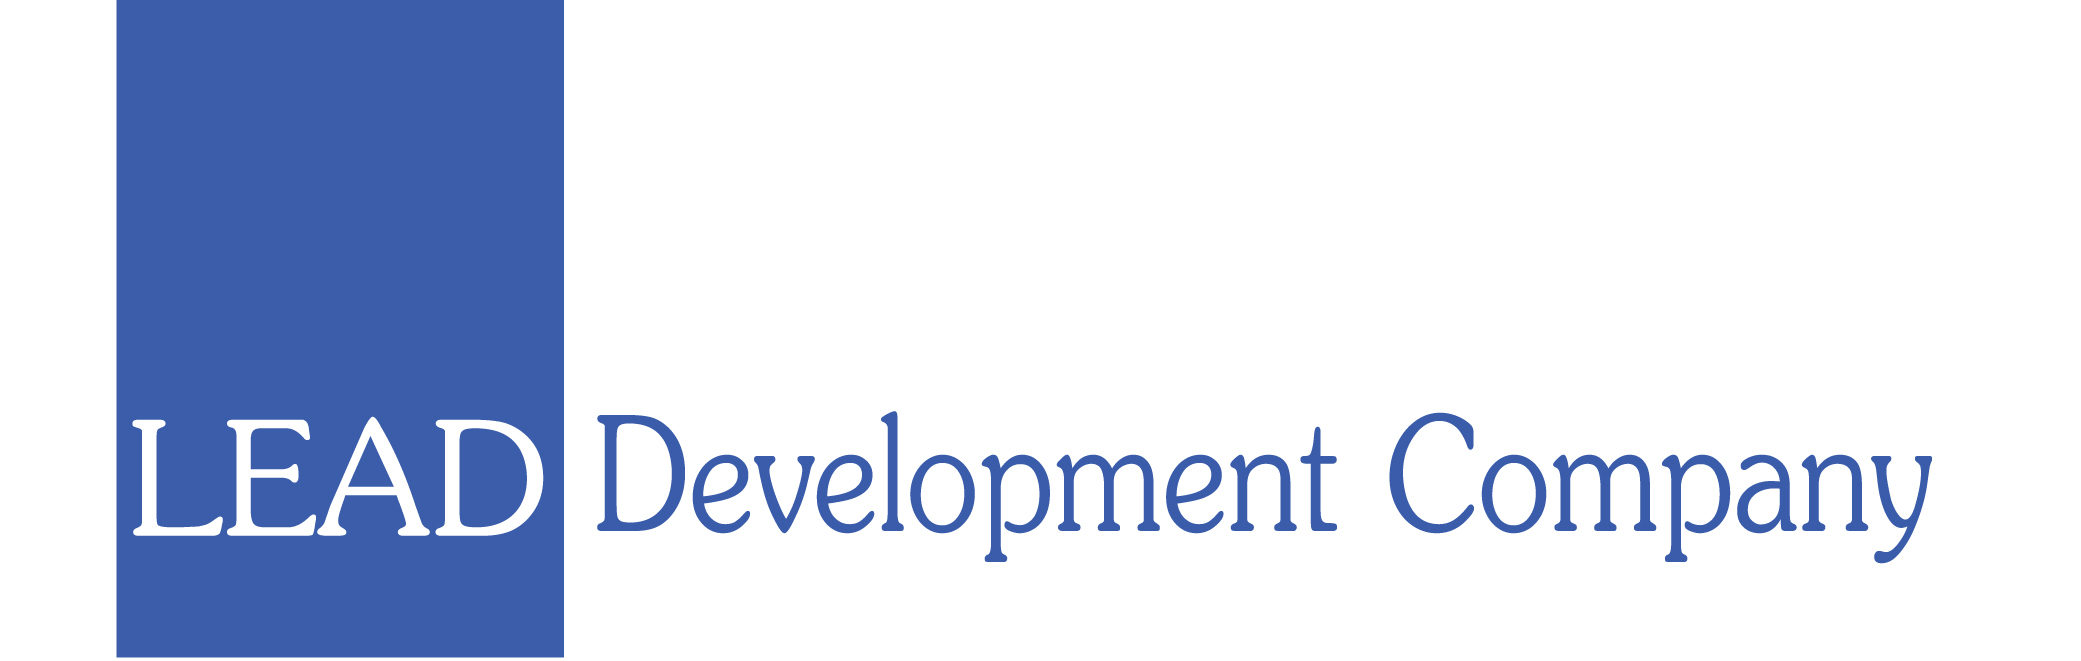 LEAD Development Company